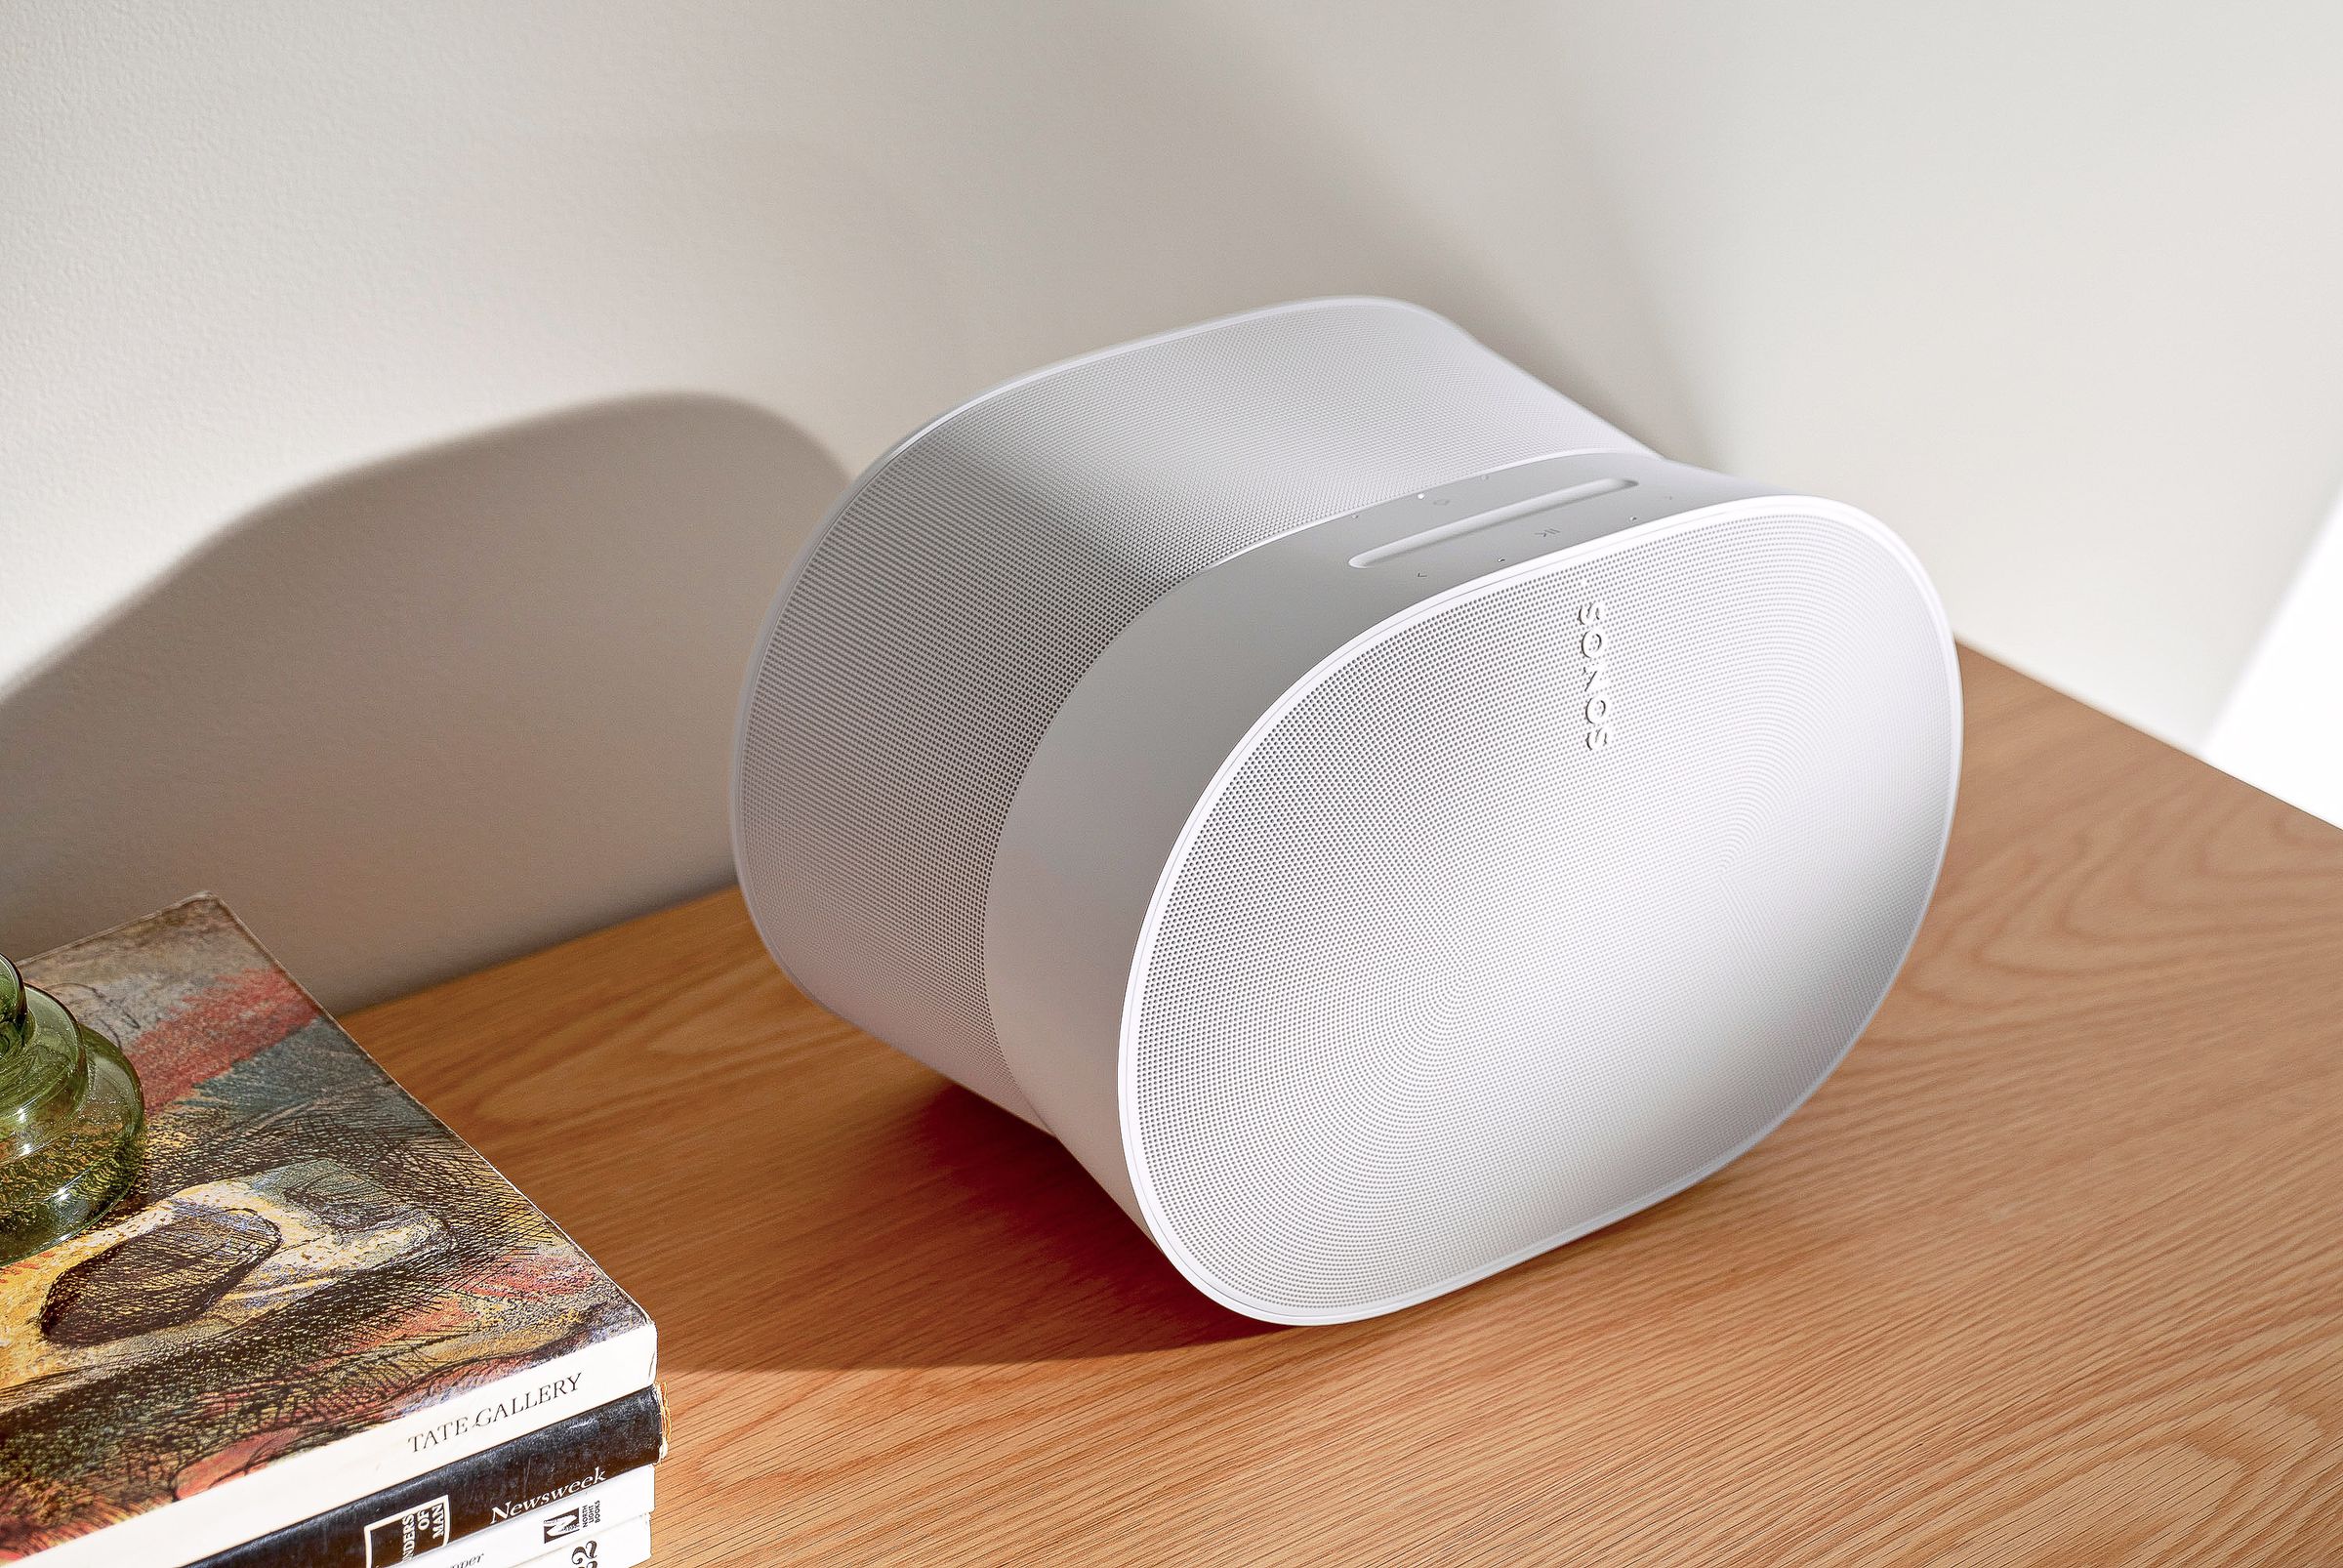 A marketing image of a white Sonos Era 300 speaker.